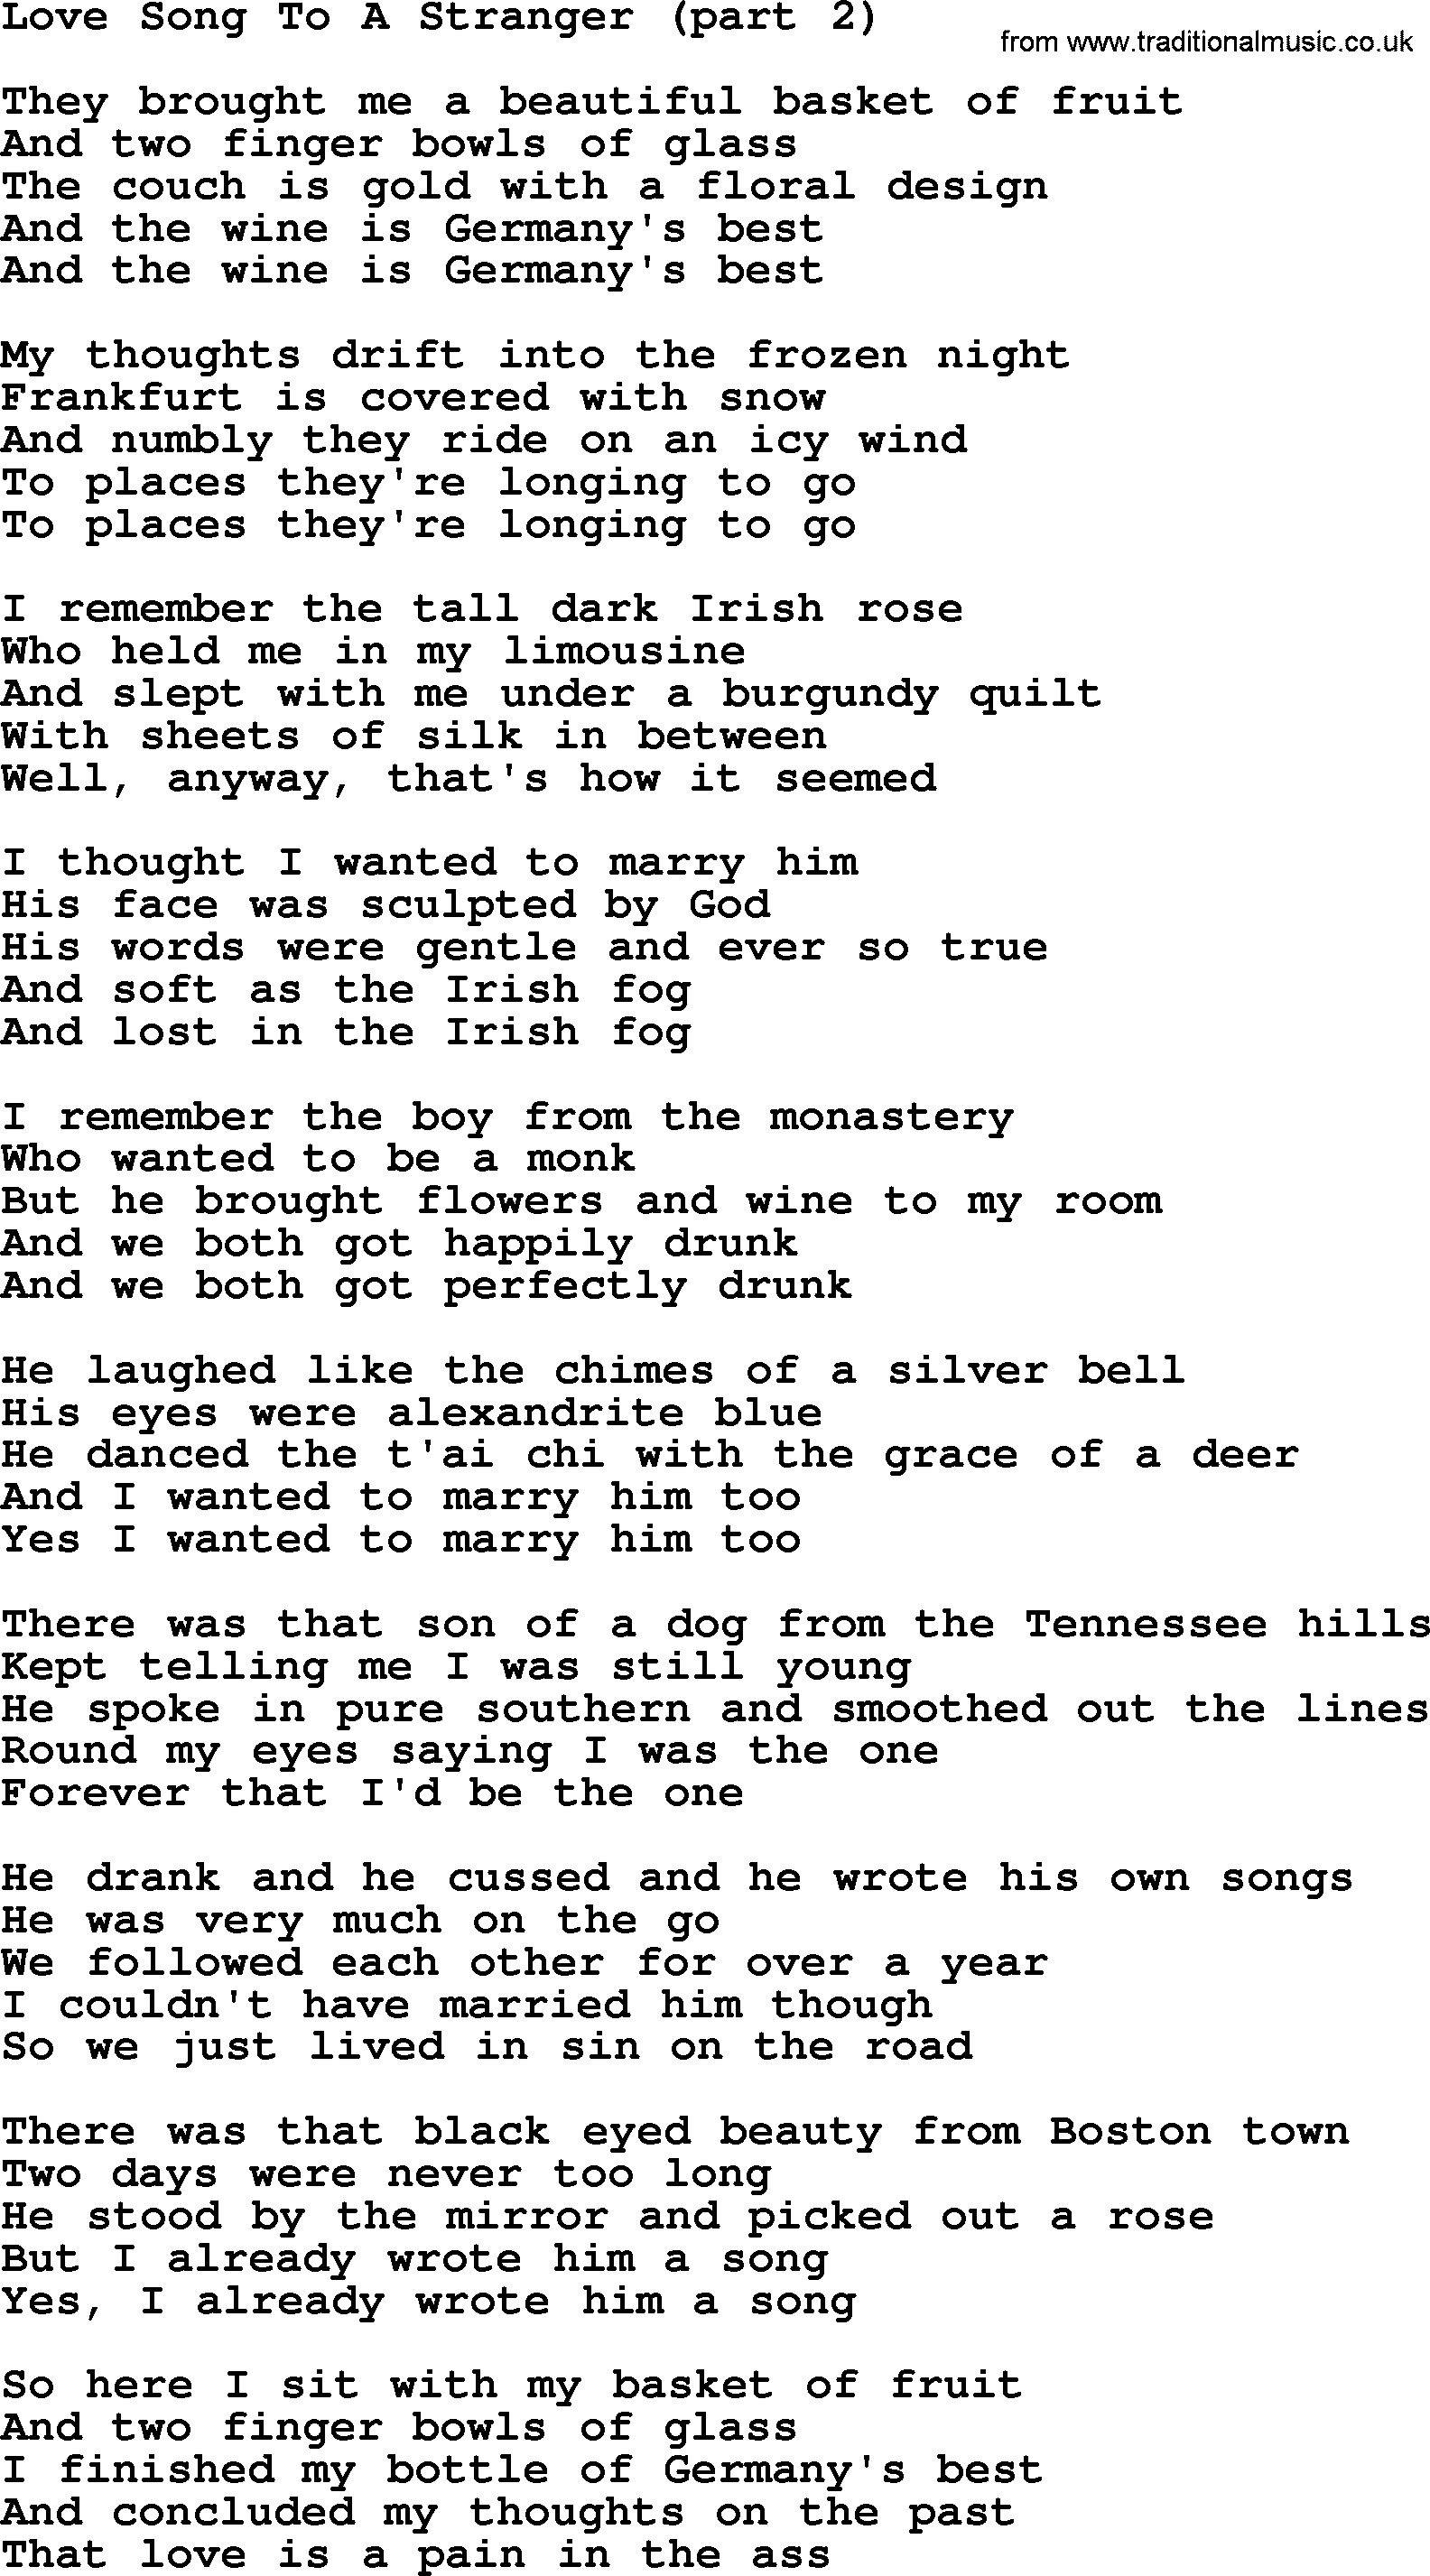 Joan Baez song Love Song To A Stranger(Part 2), lyrics